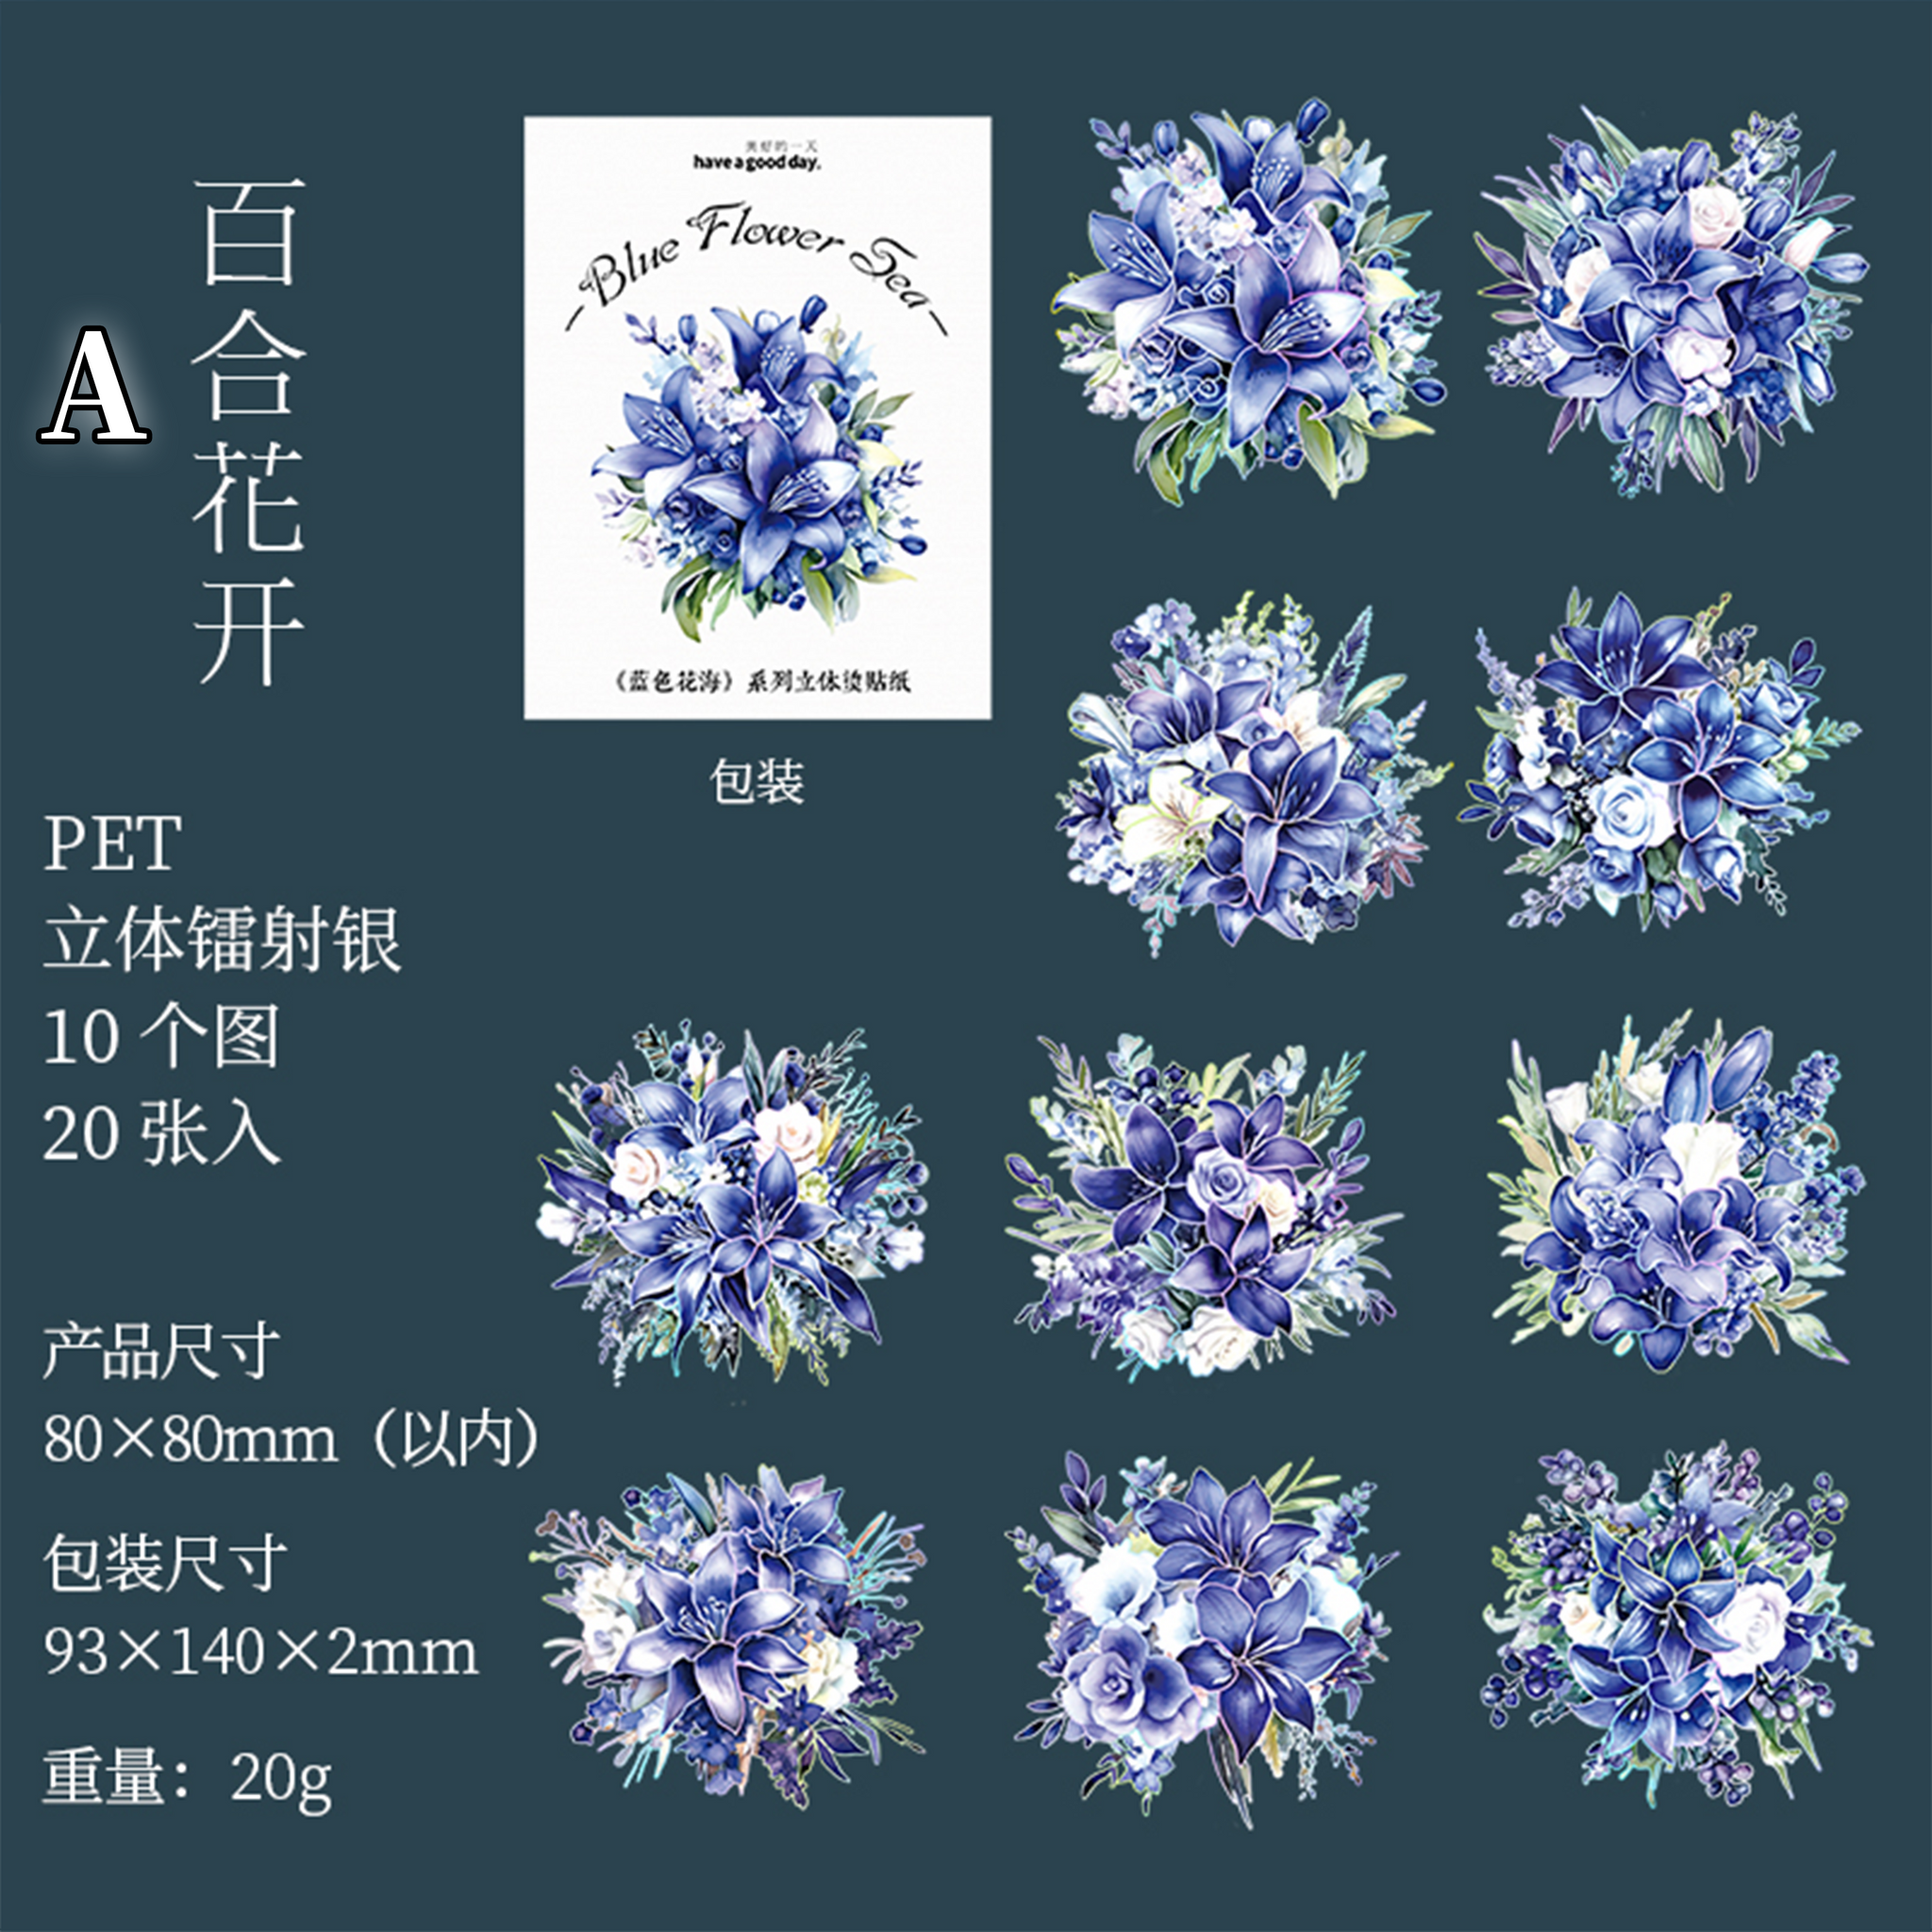 Sea of Blue Flowers Scrapbooking Journal PET Sticker